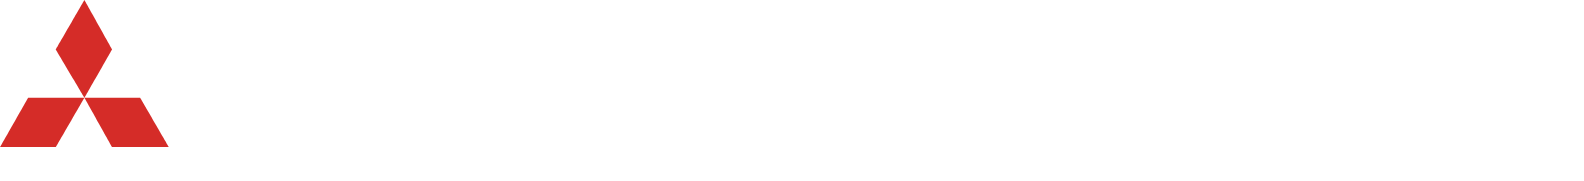 Mitsubishi Corporation Logo groß für dunkle Hintergründe (transparentes PNG)